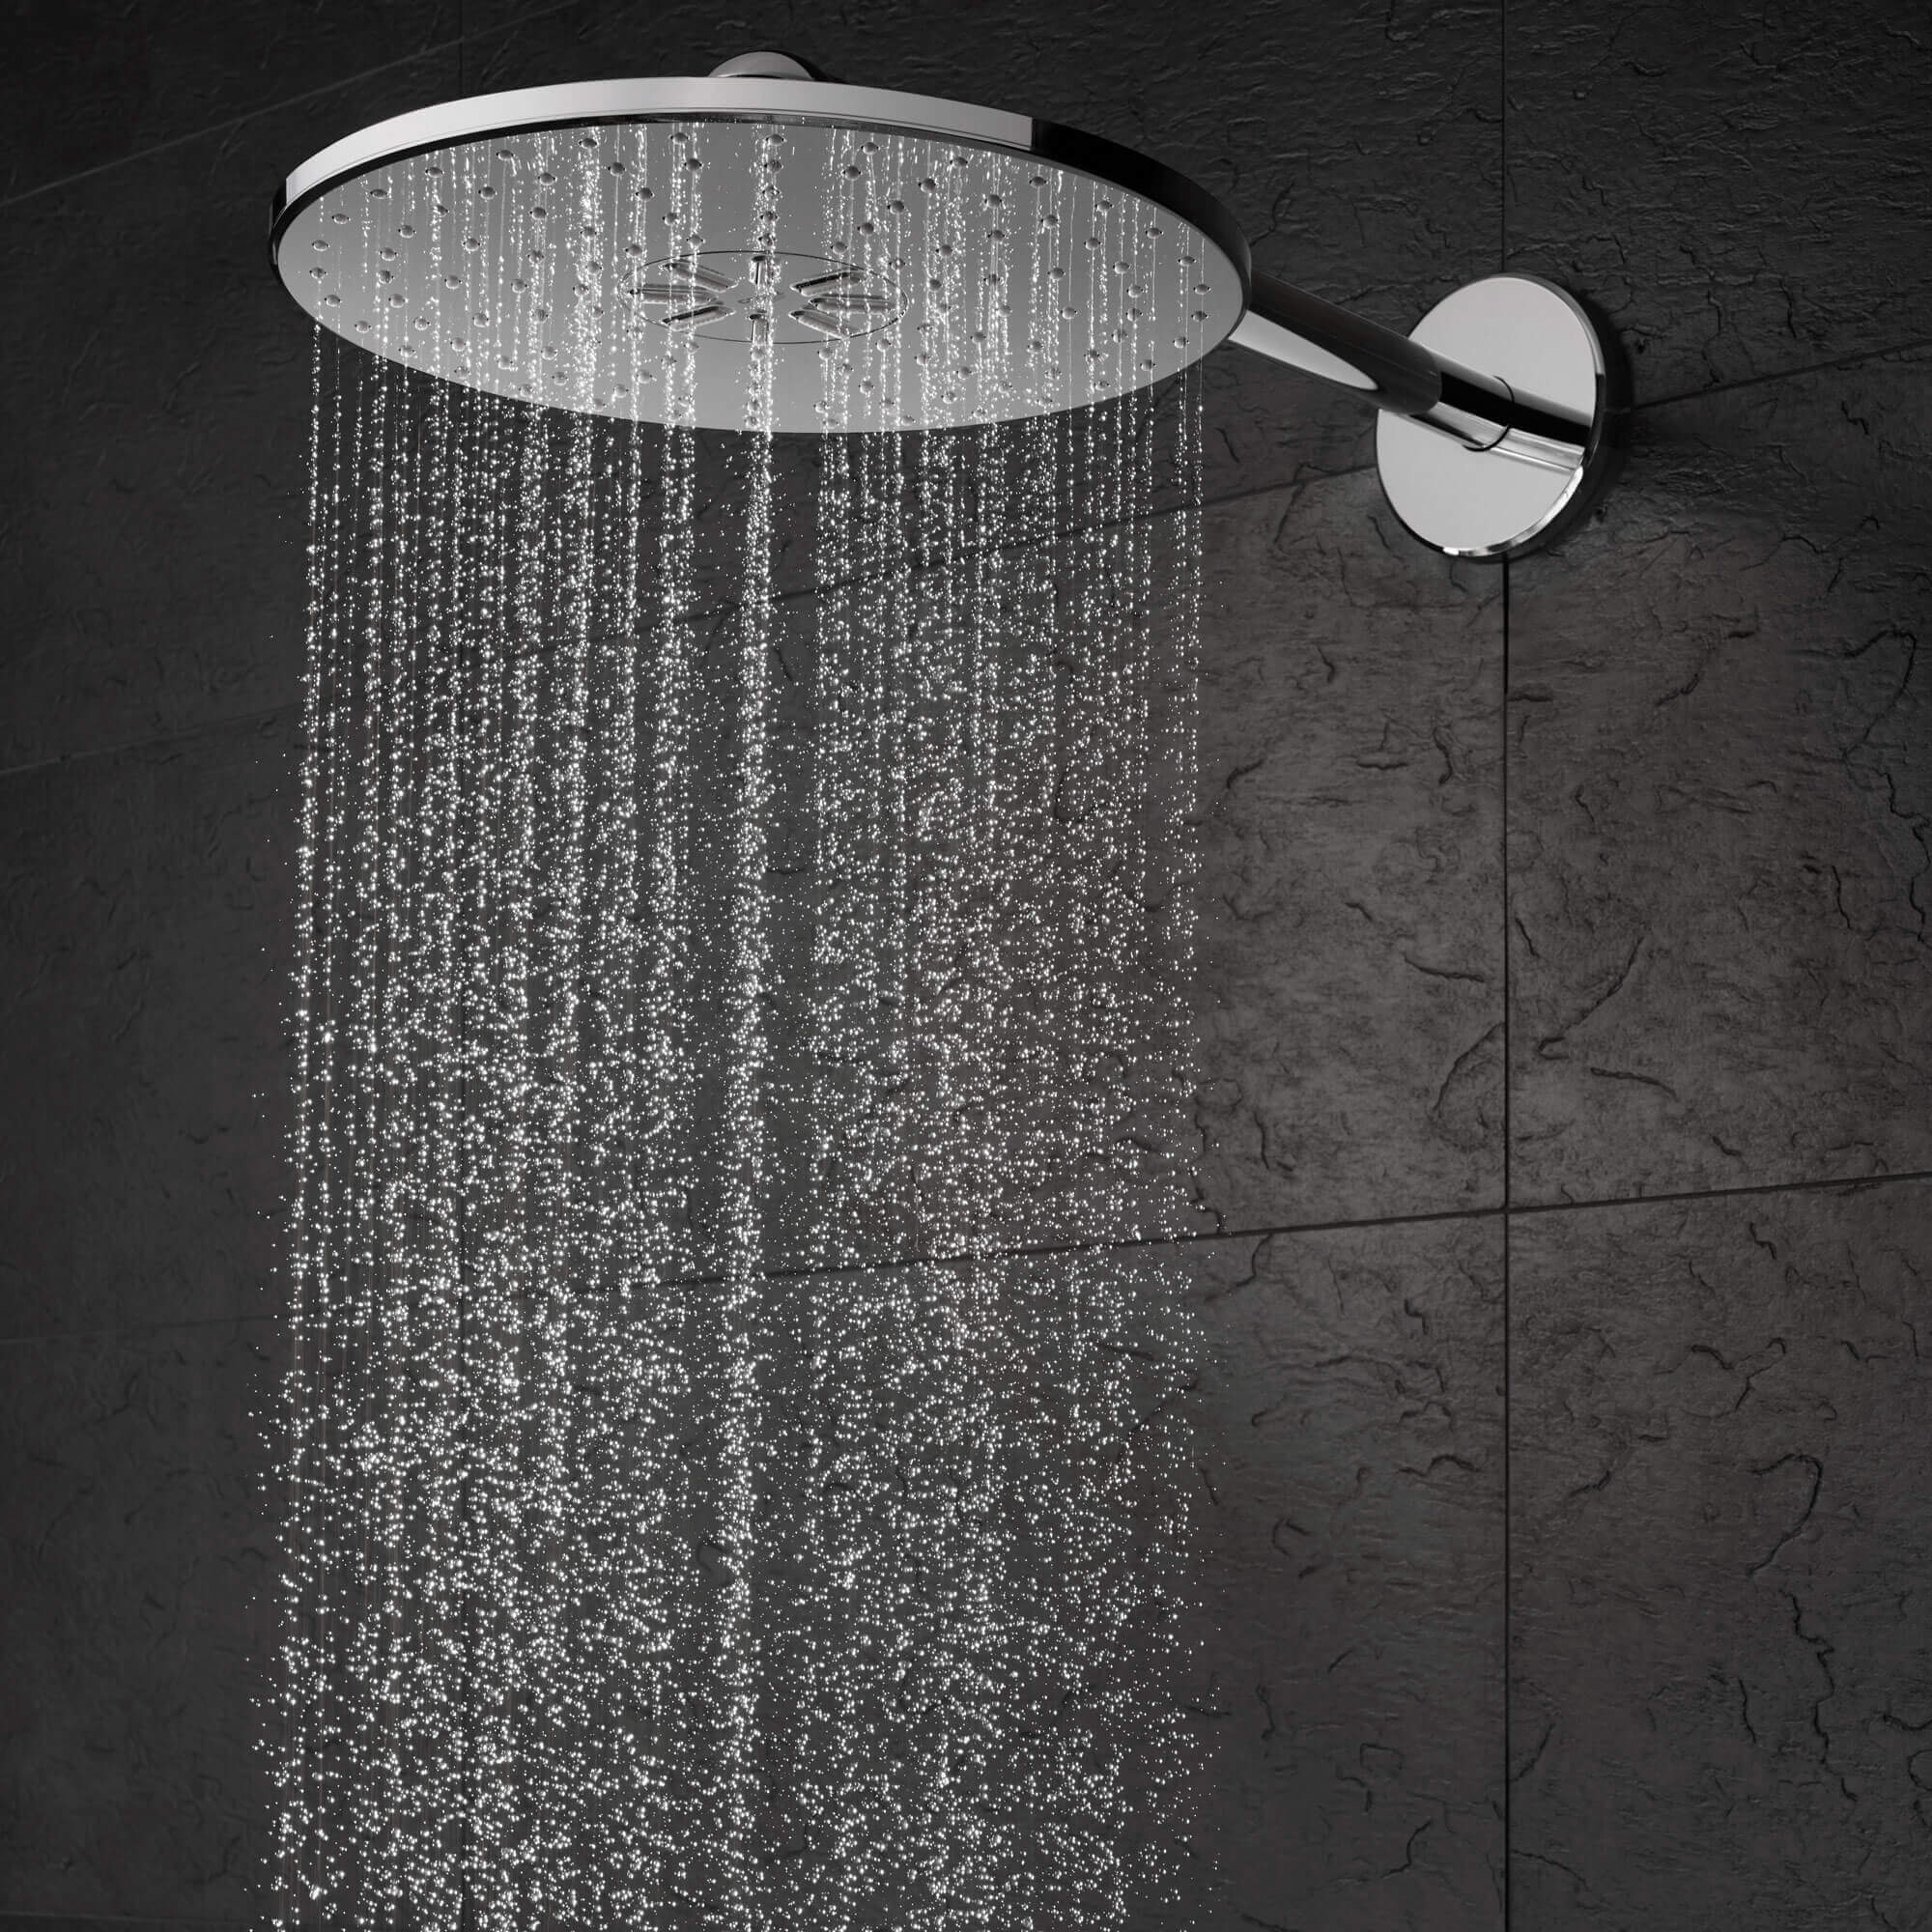 Grohe head shower spraying water.